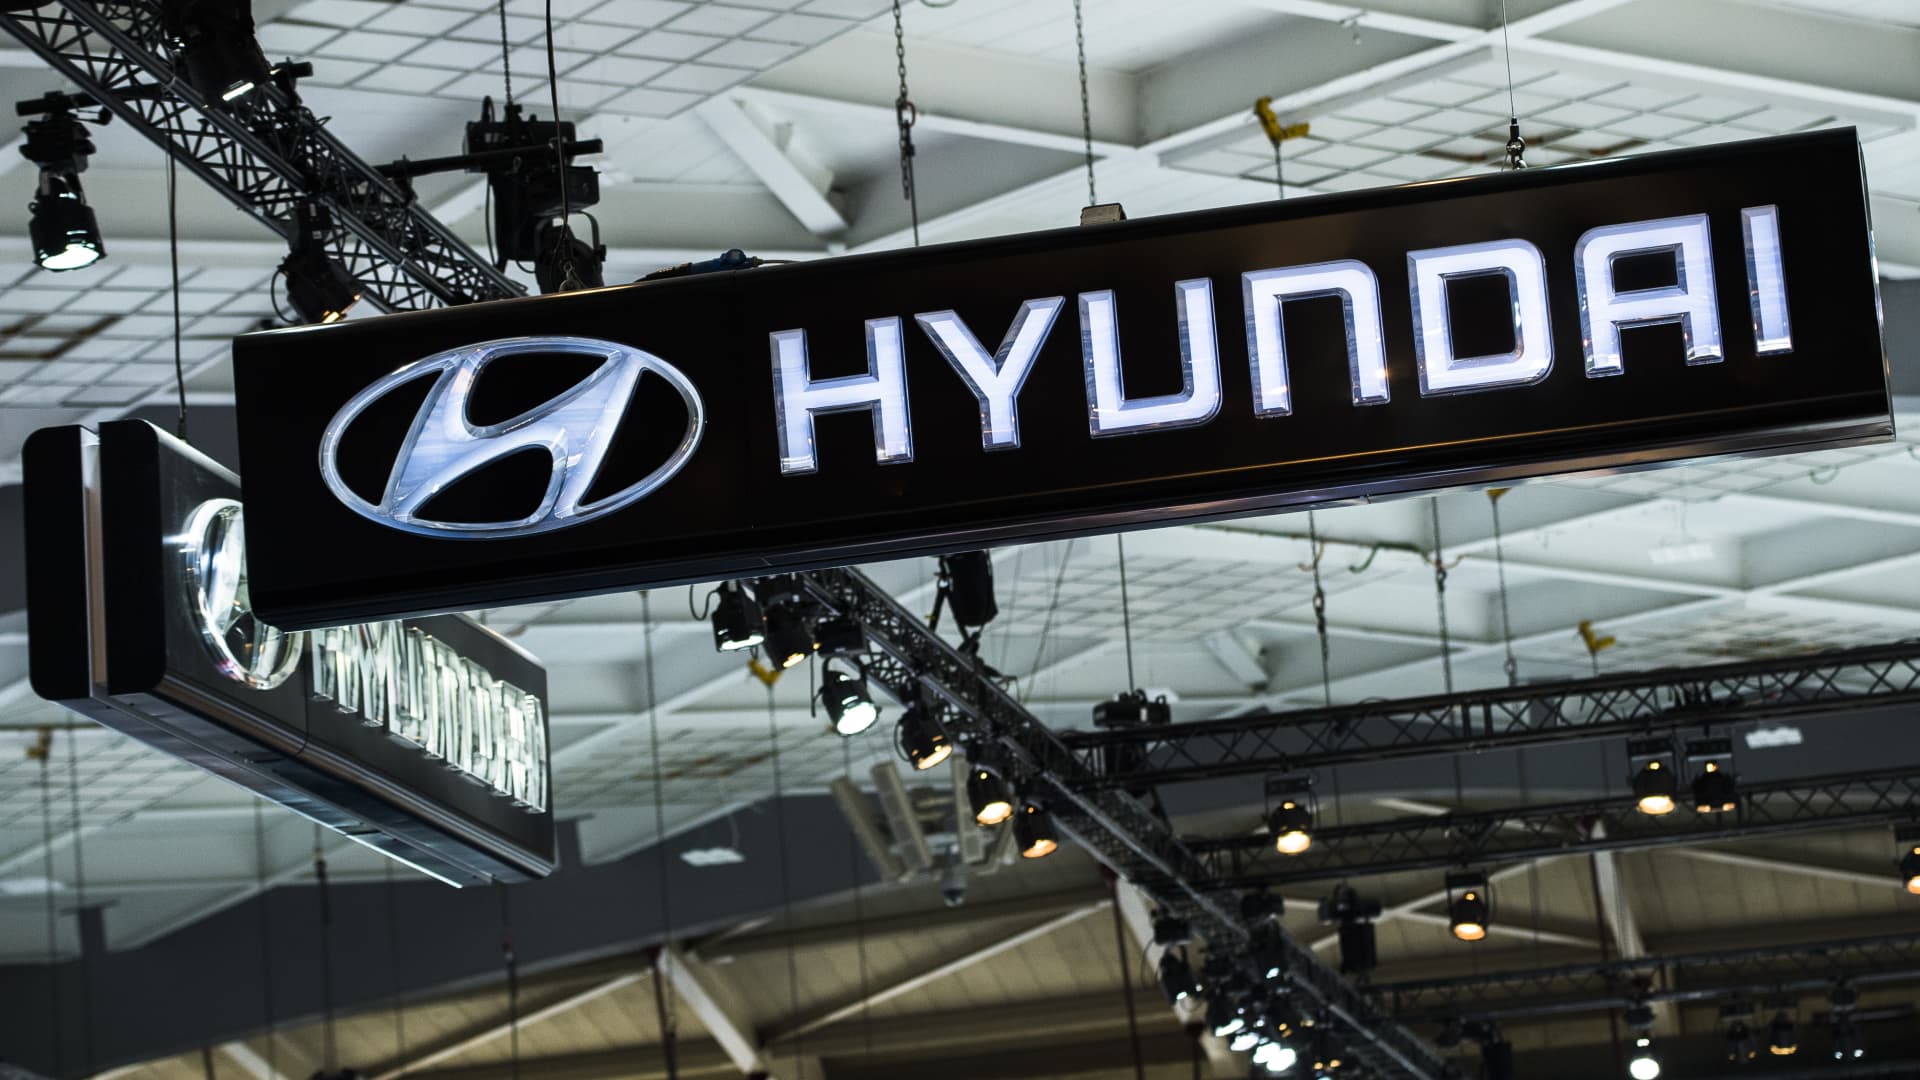 Hyundai recalls 239,000 cars for exploding seat belt parts